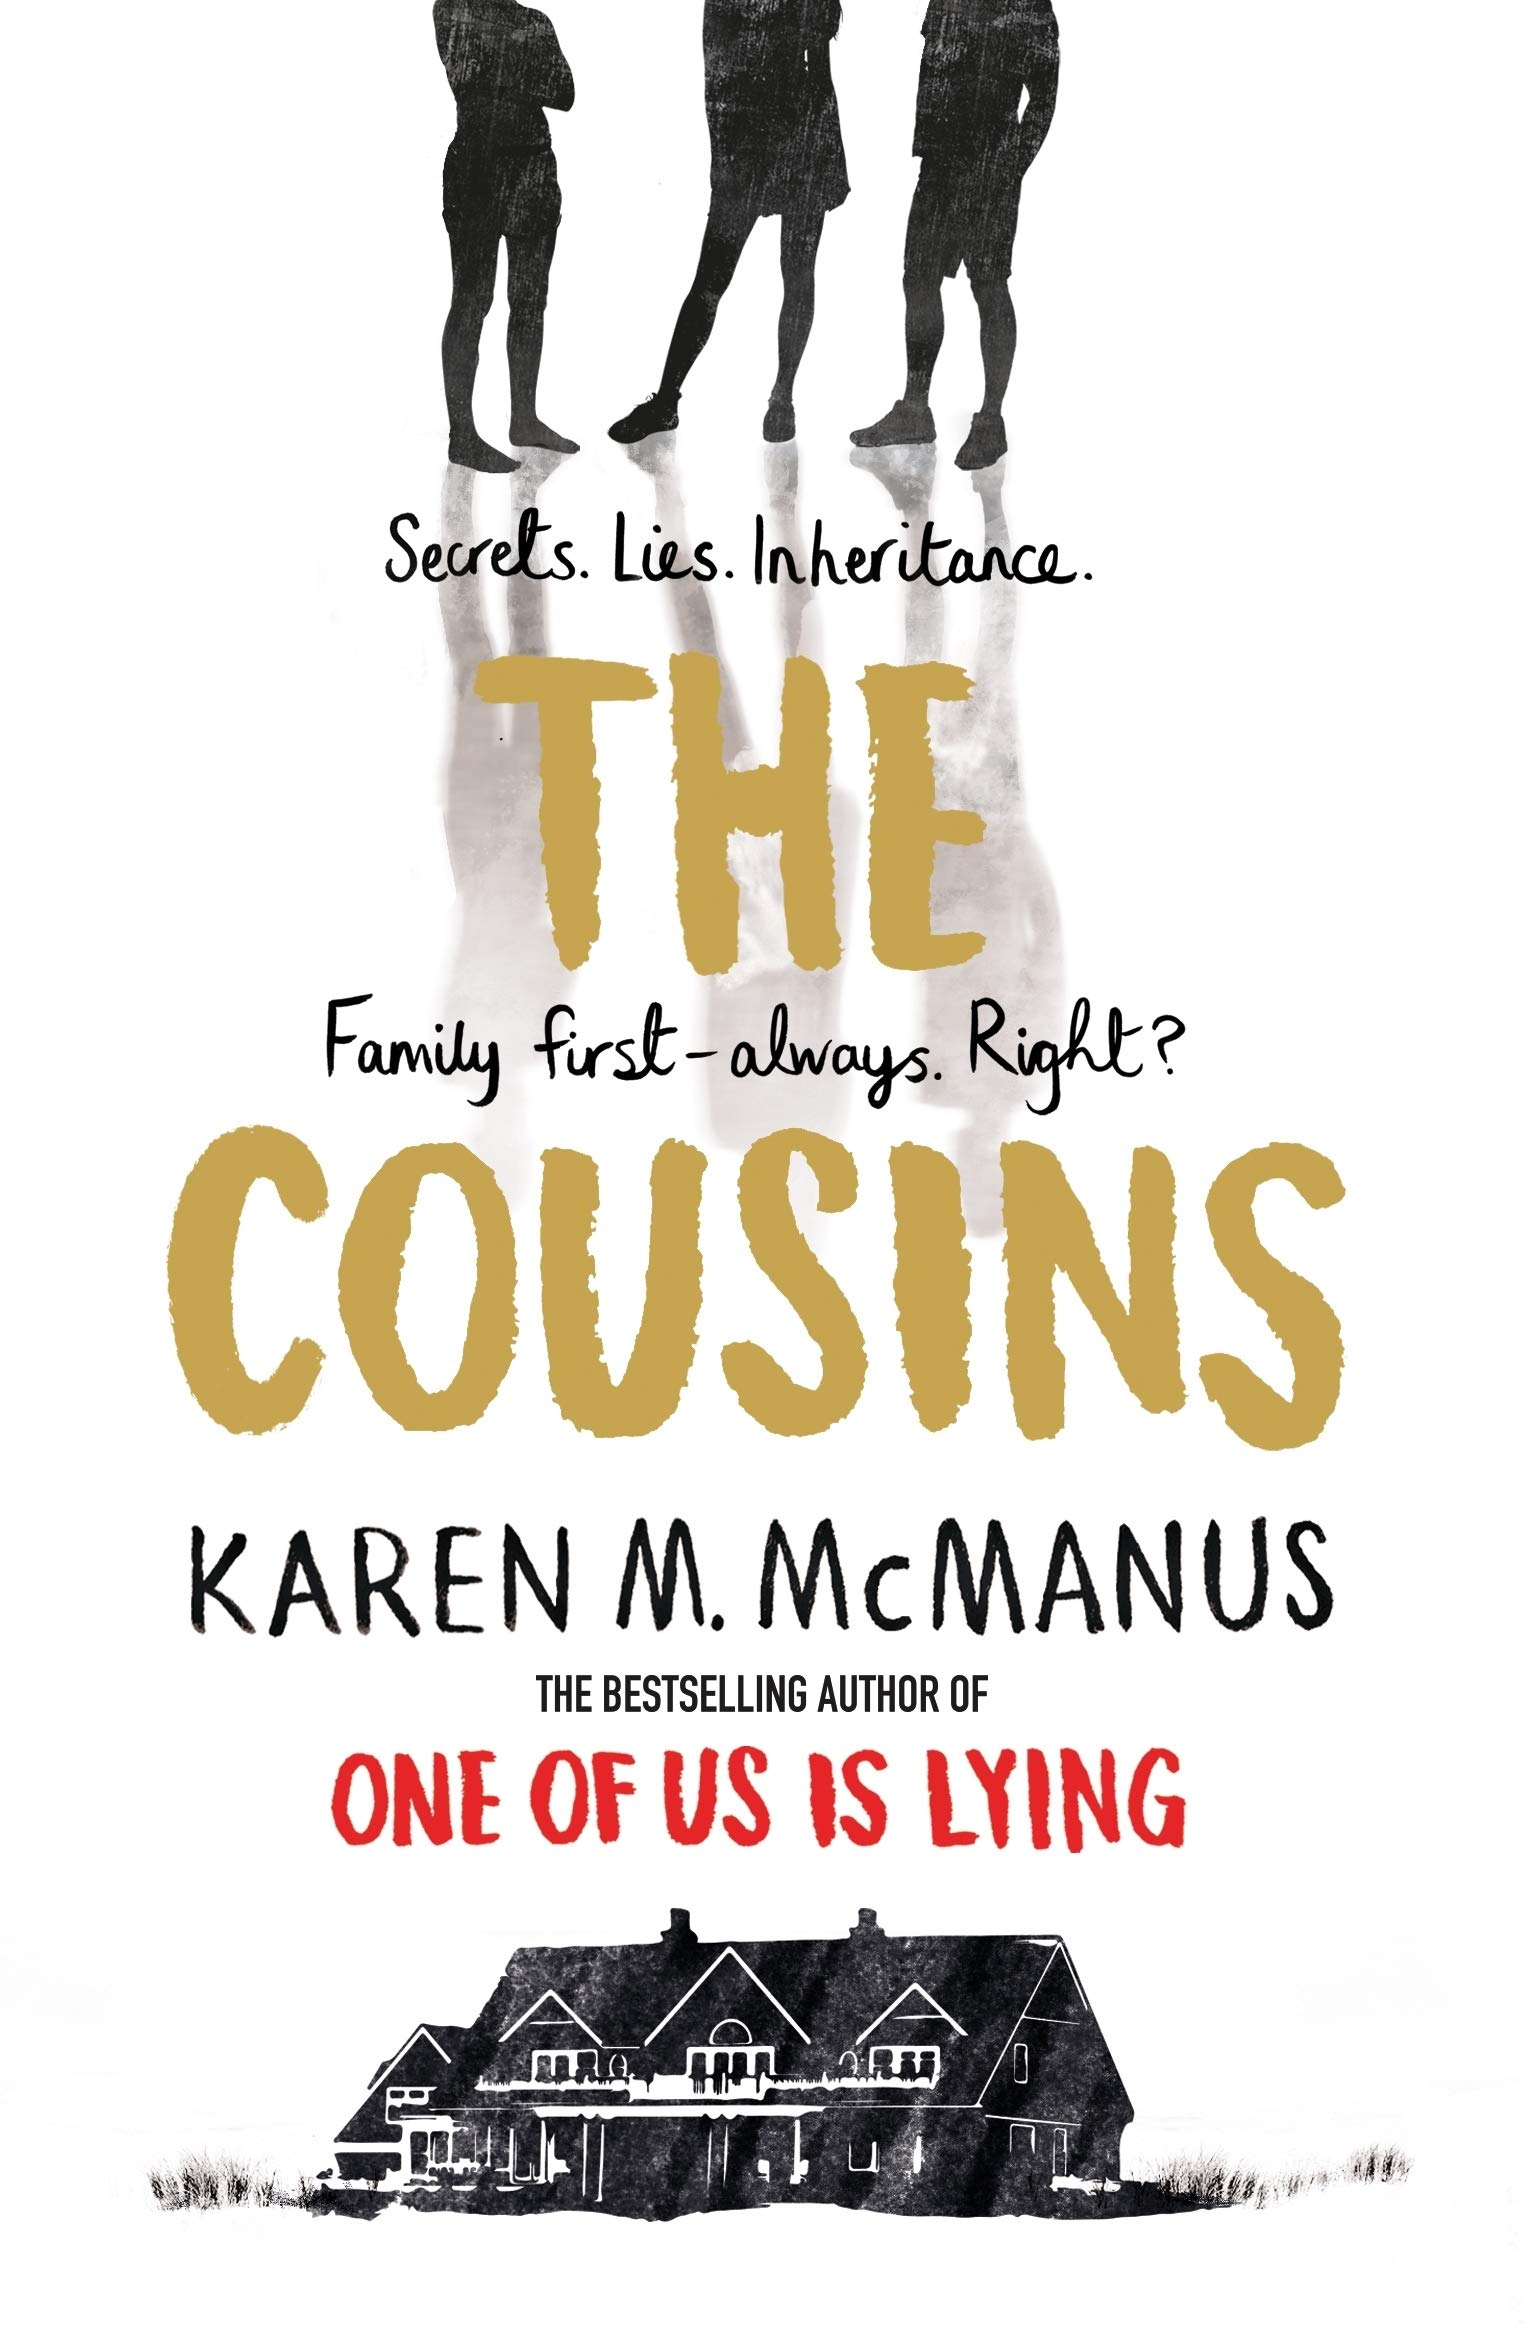 the cousins karen mcmanus